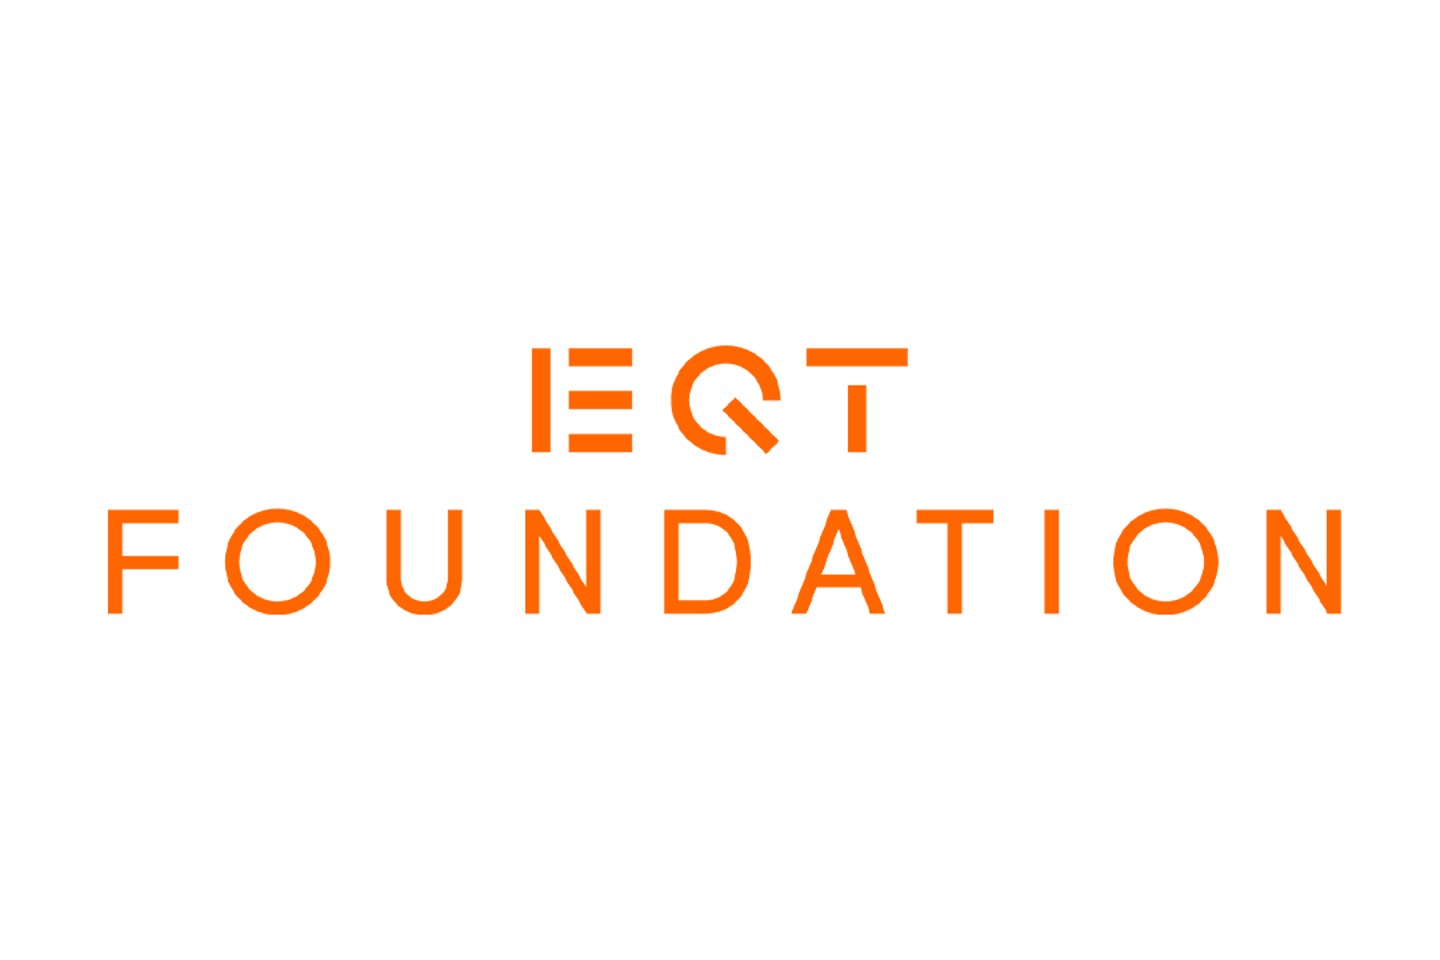 EQT Foundation